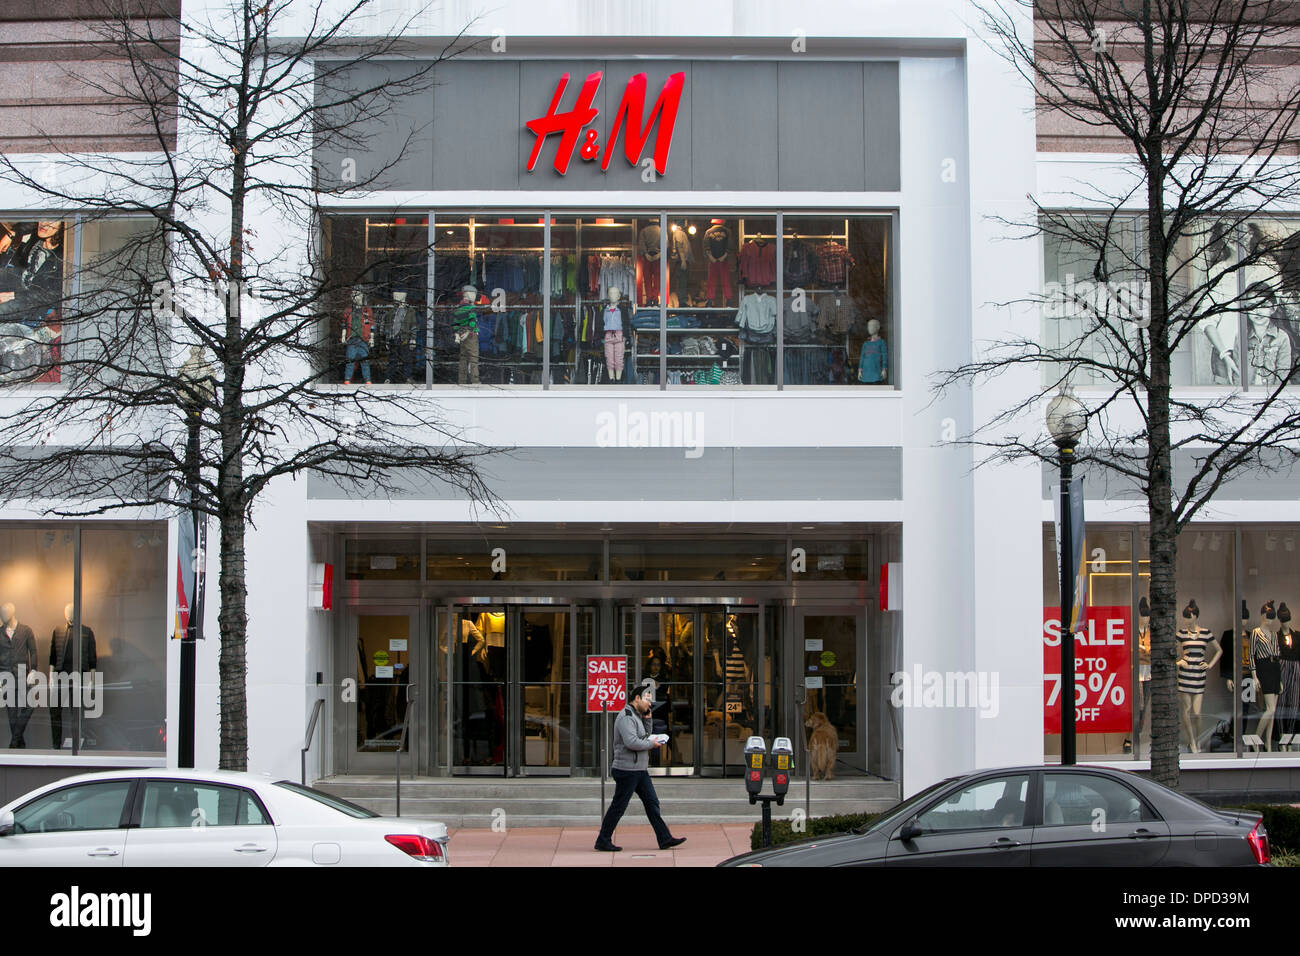 A H&M (Hennes & Mauritz) retail store in Washington, DC Stock Photo - Alamy